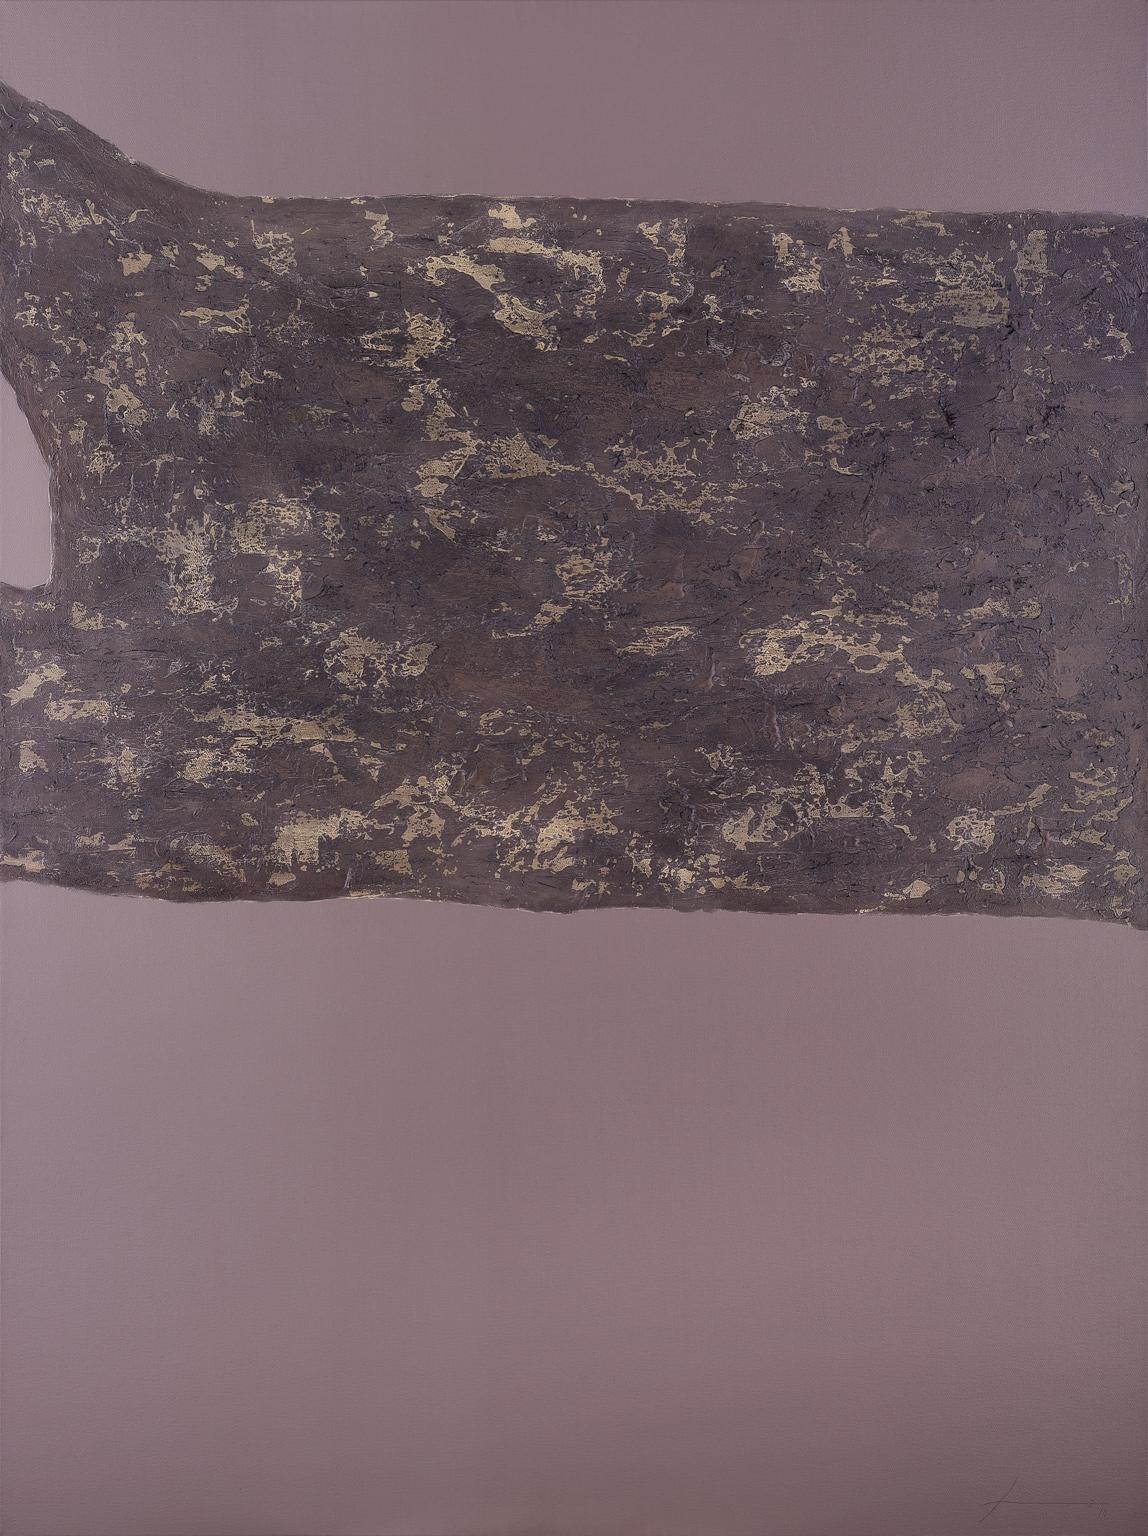 Jon Errazu Landscape Painting - Stones XXXVI - 21st Century, Contemporary, Abstract Painting, Mixed Media